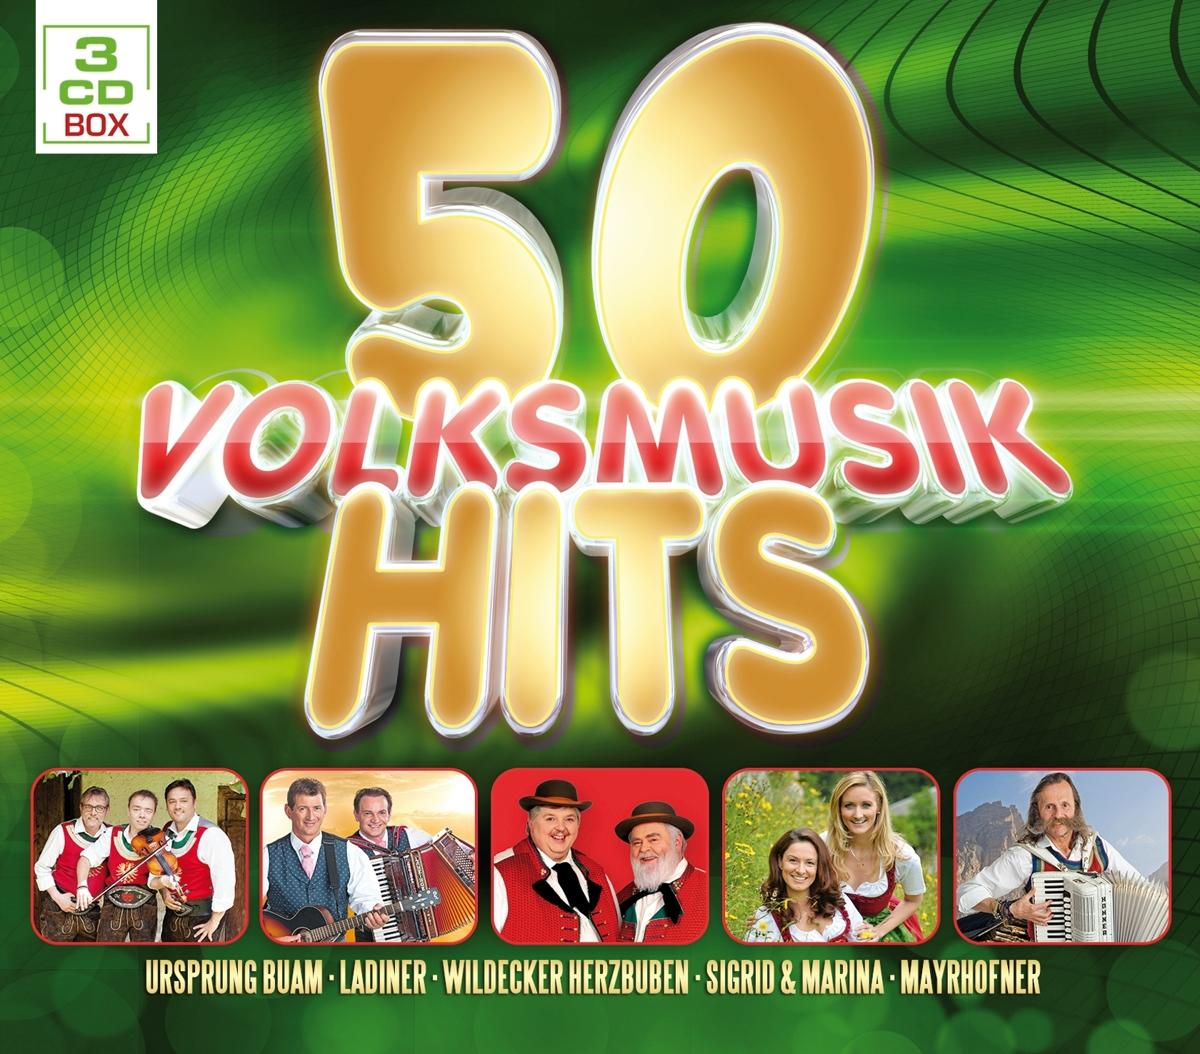 VARIOUS - 50 (CD) Hits - Volksmusik